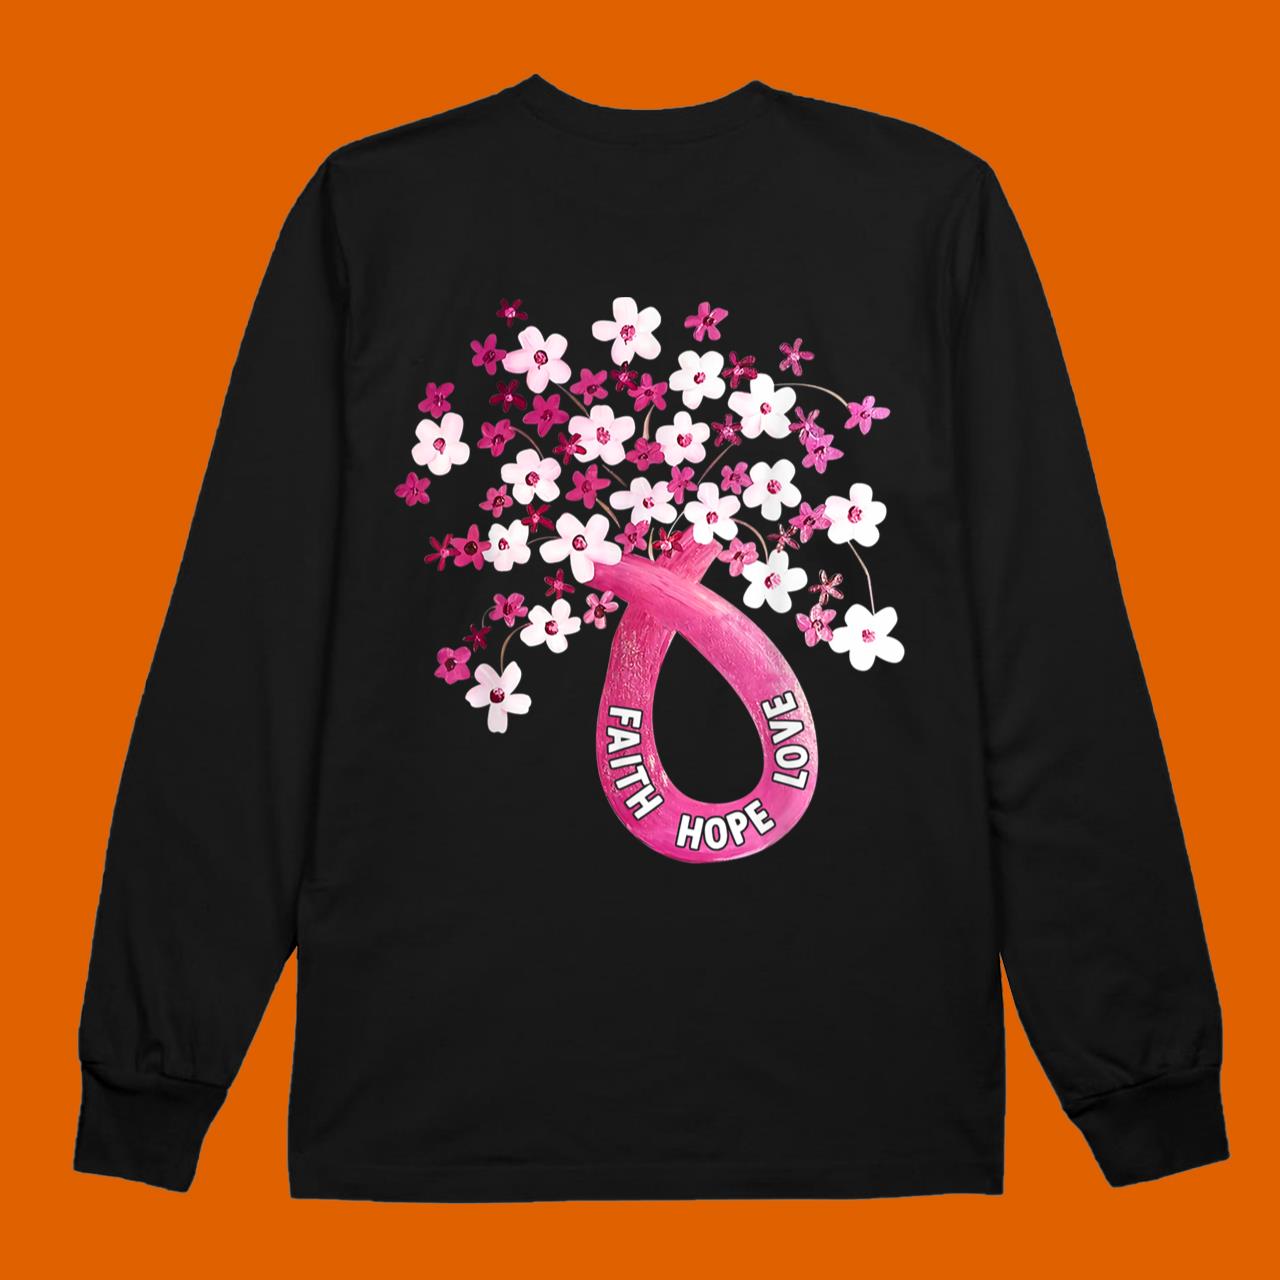 Faith Hope Love Pink Ribbon Breast Cancer Awareness T-Shirt